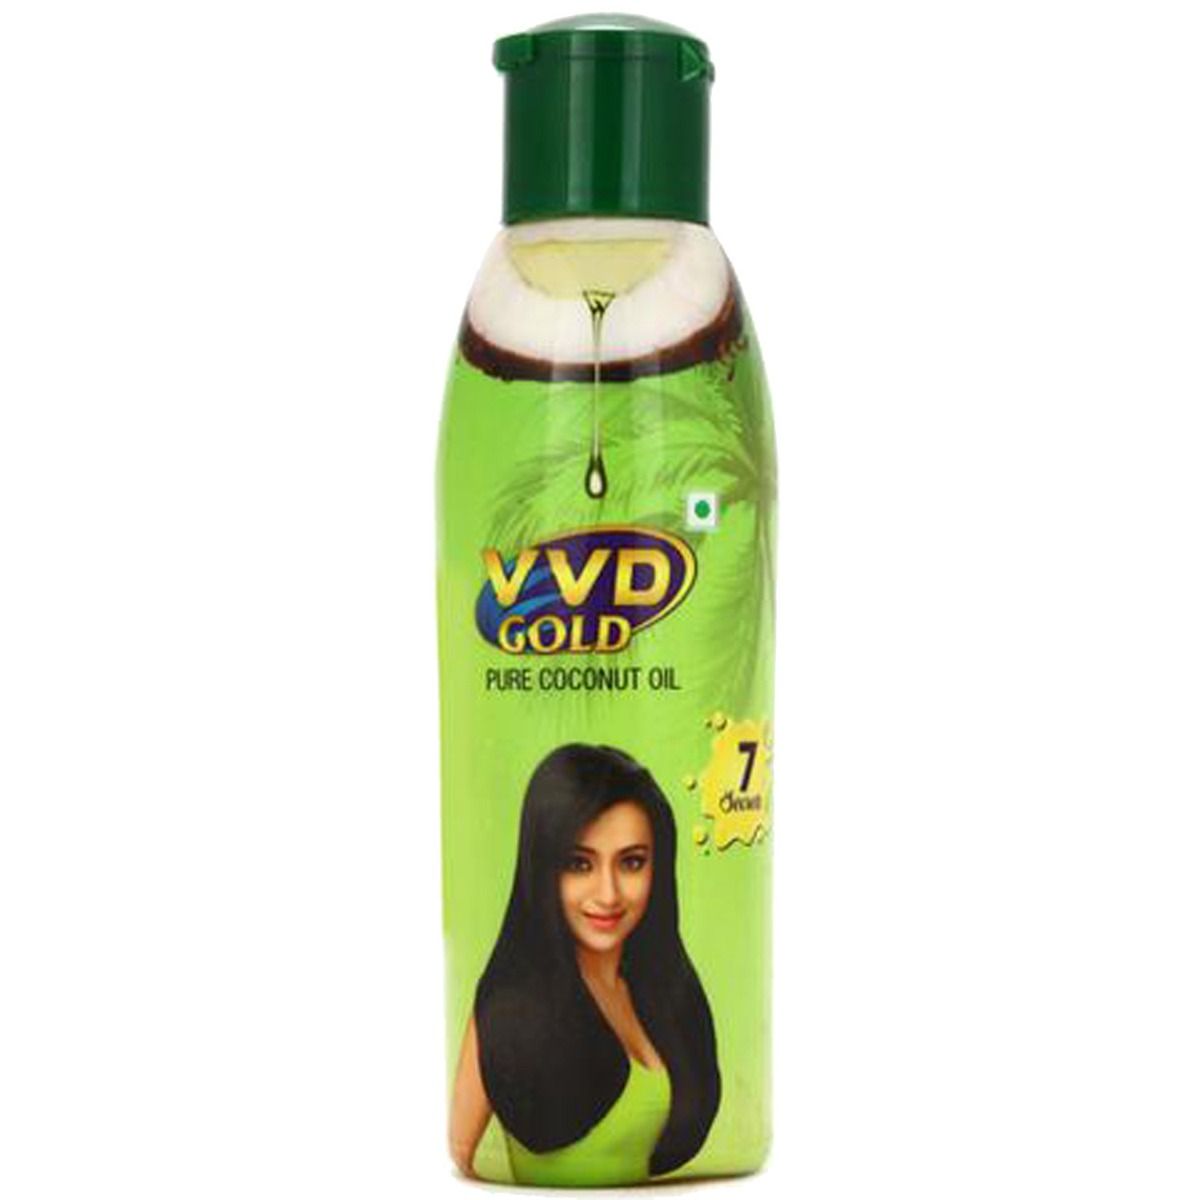 Buy Vvd Gold Pure Coconut Oil, 100 ml Online